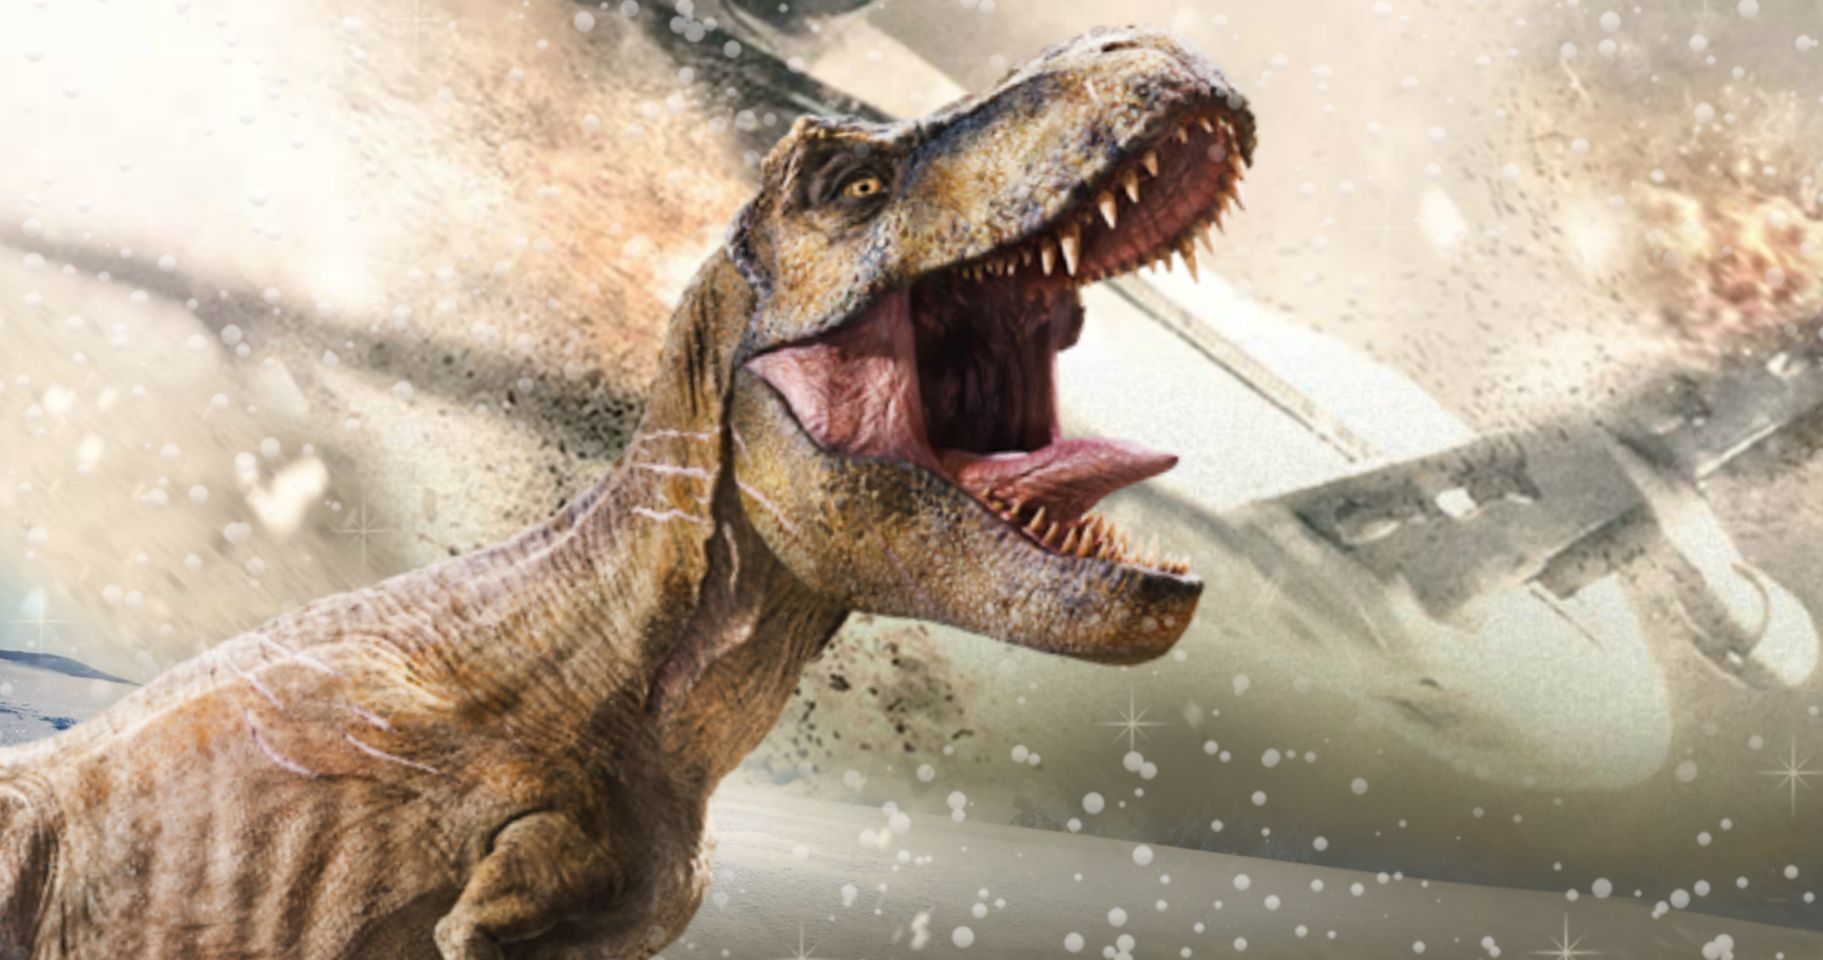 Jurassic World: Dominion Set Photos Tease a Snowy Plane Crash as Filming Resumes